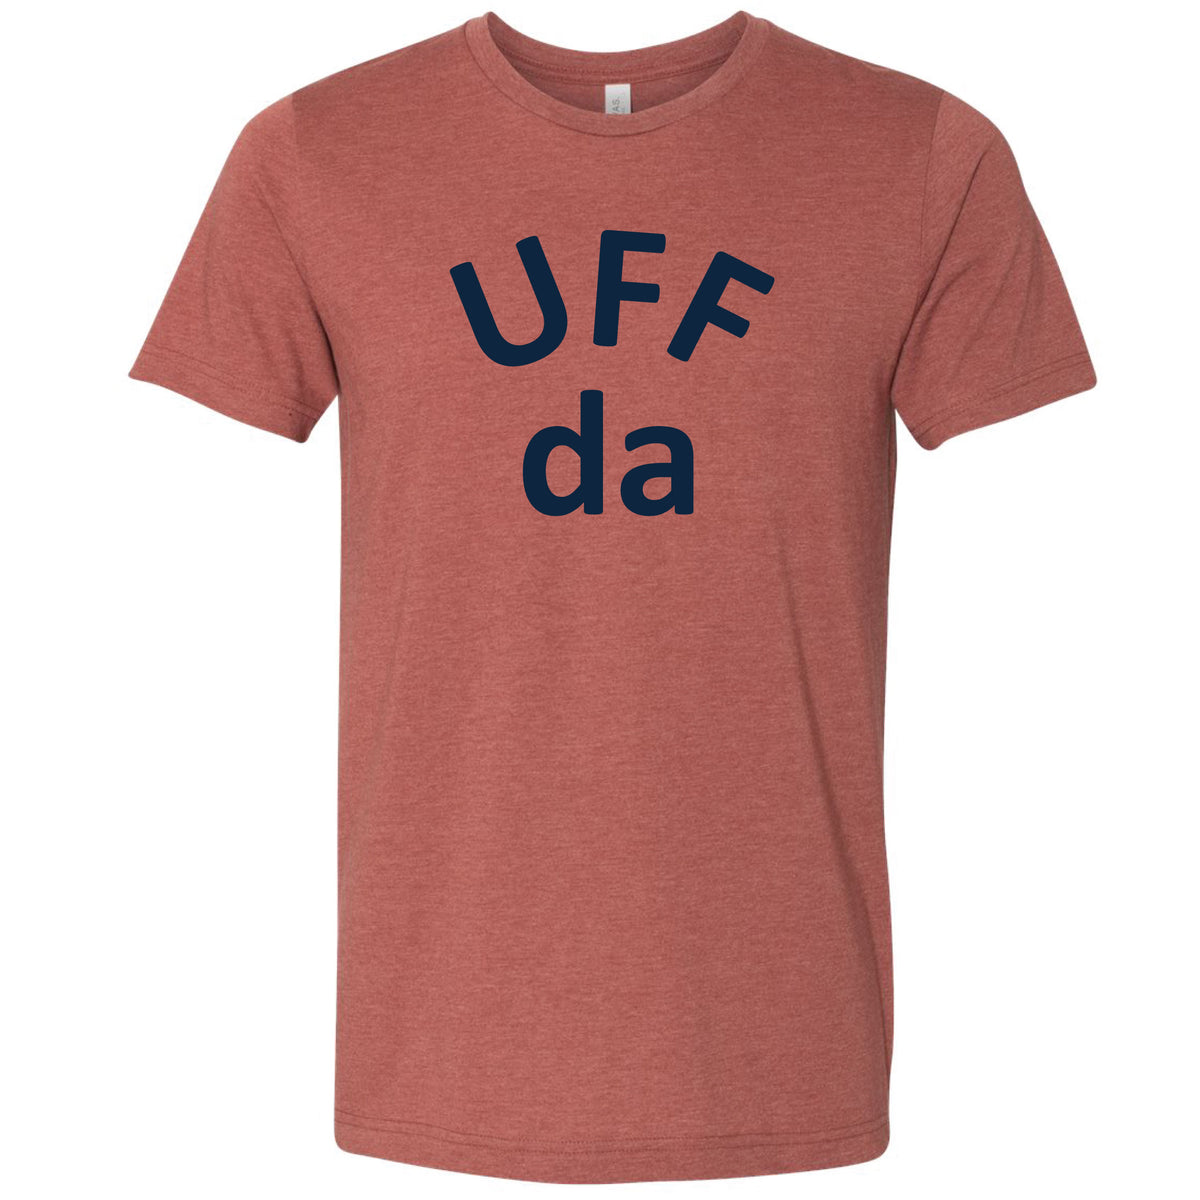 Uff Da Definition Shirt, Funny Minnesota Shirt, Funny Graphic Tee